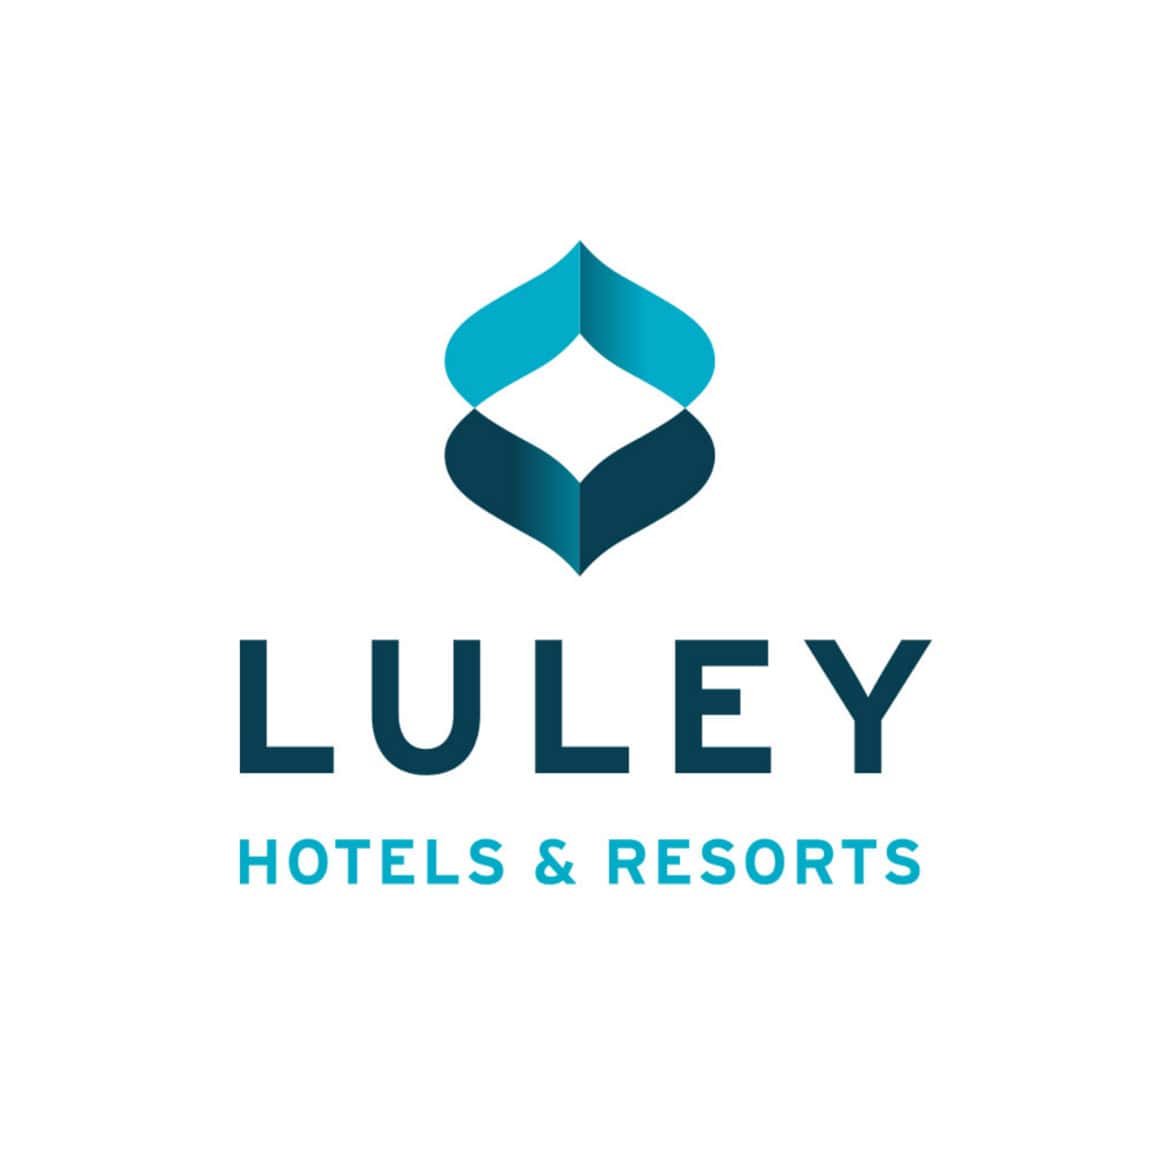 LULEY Re-branding